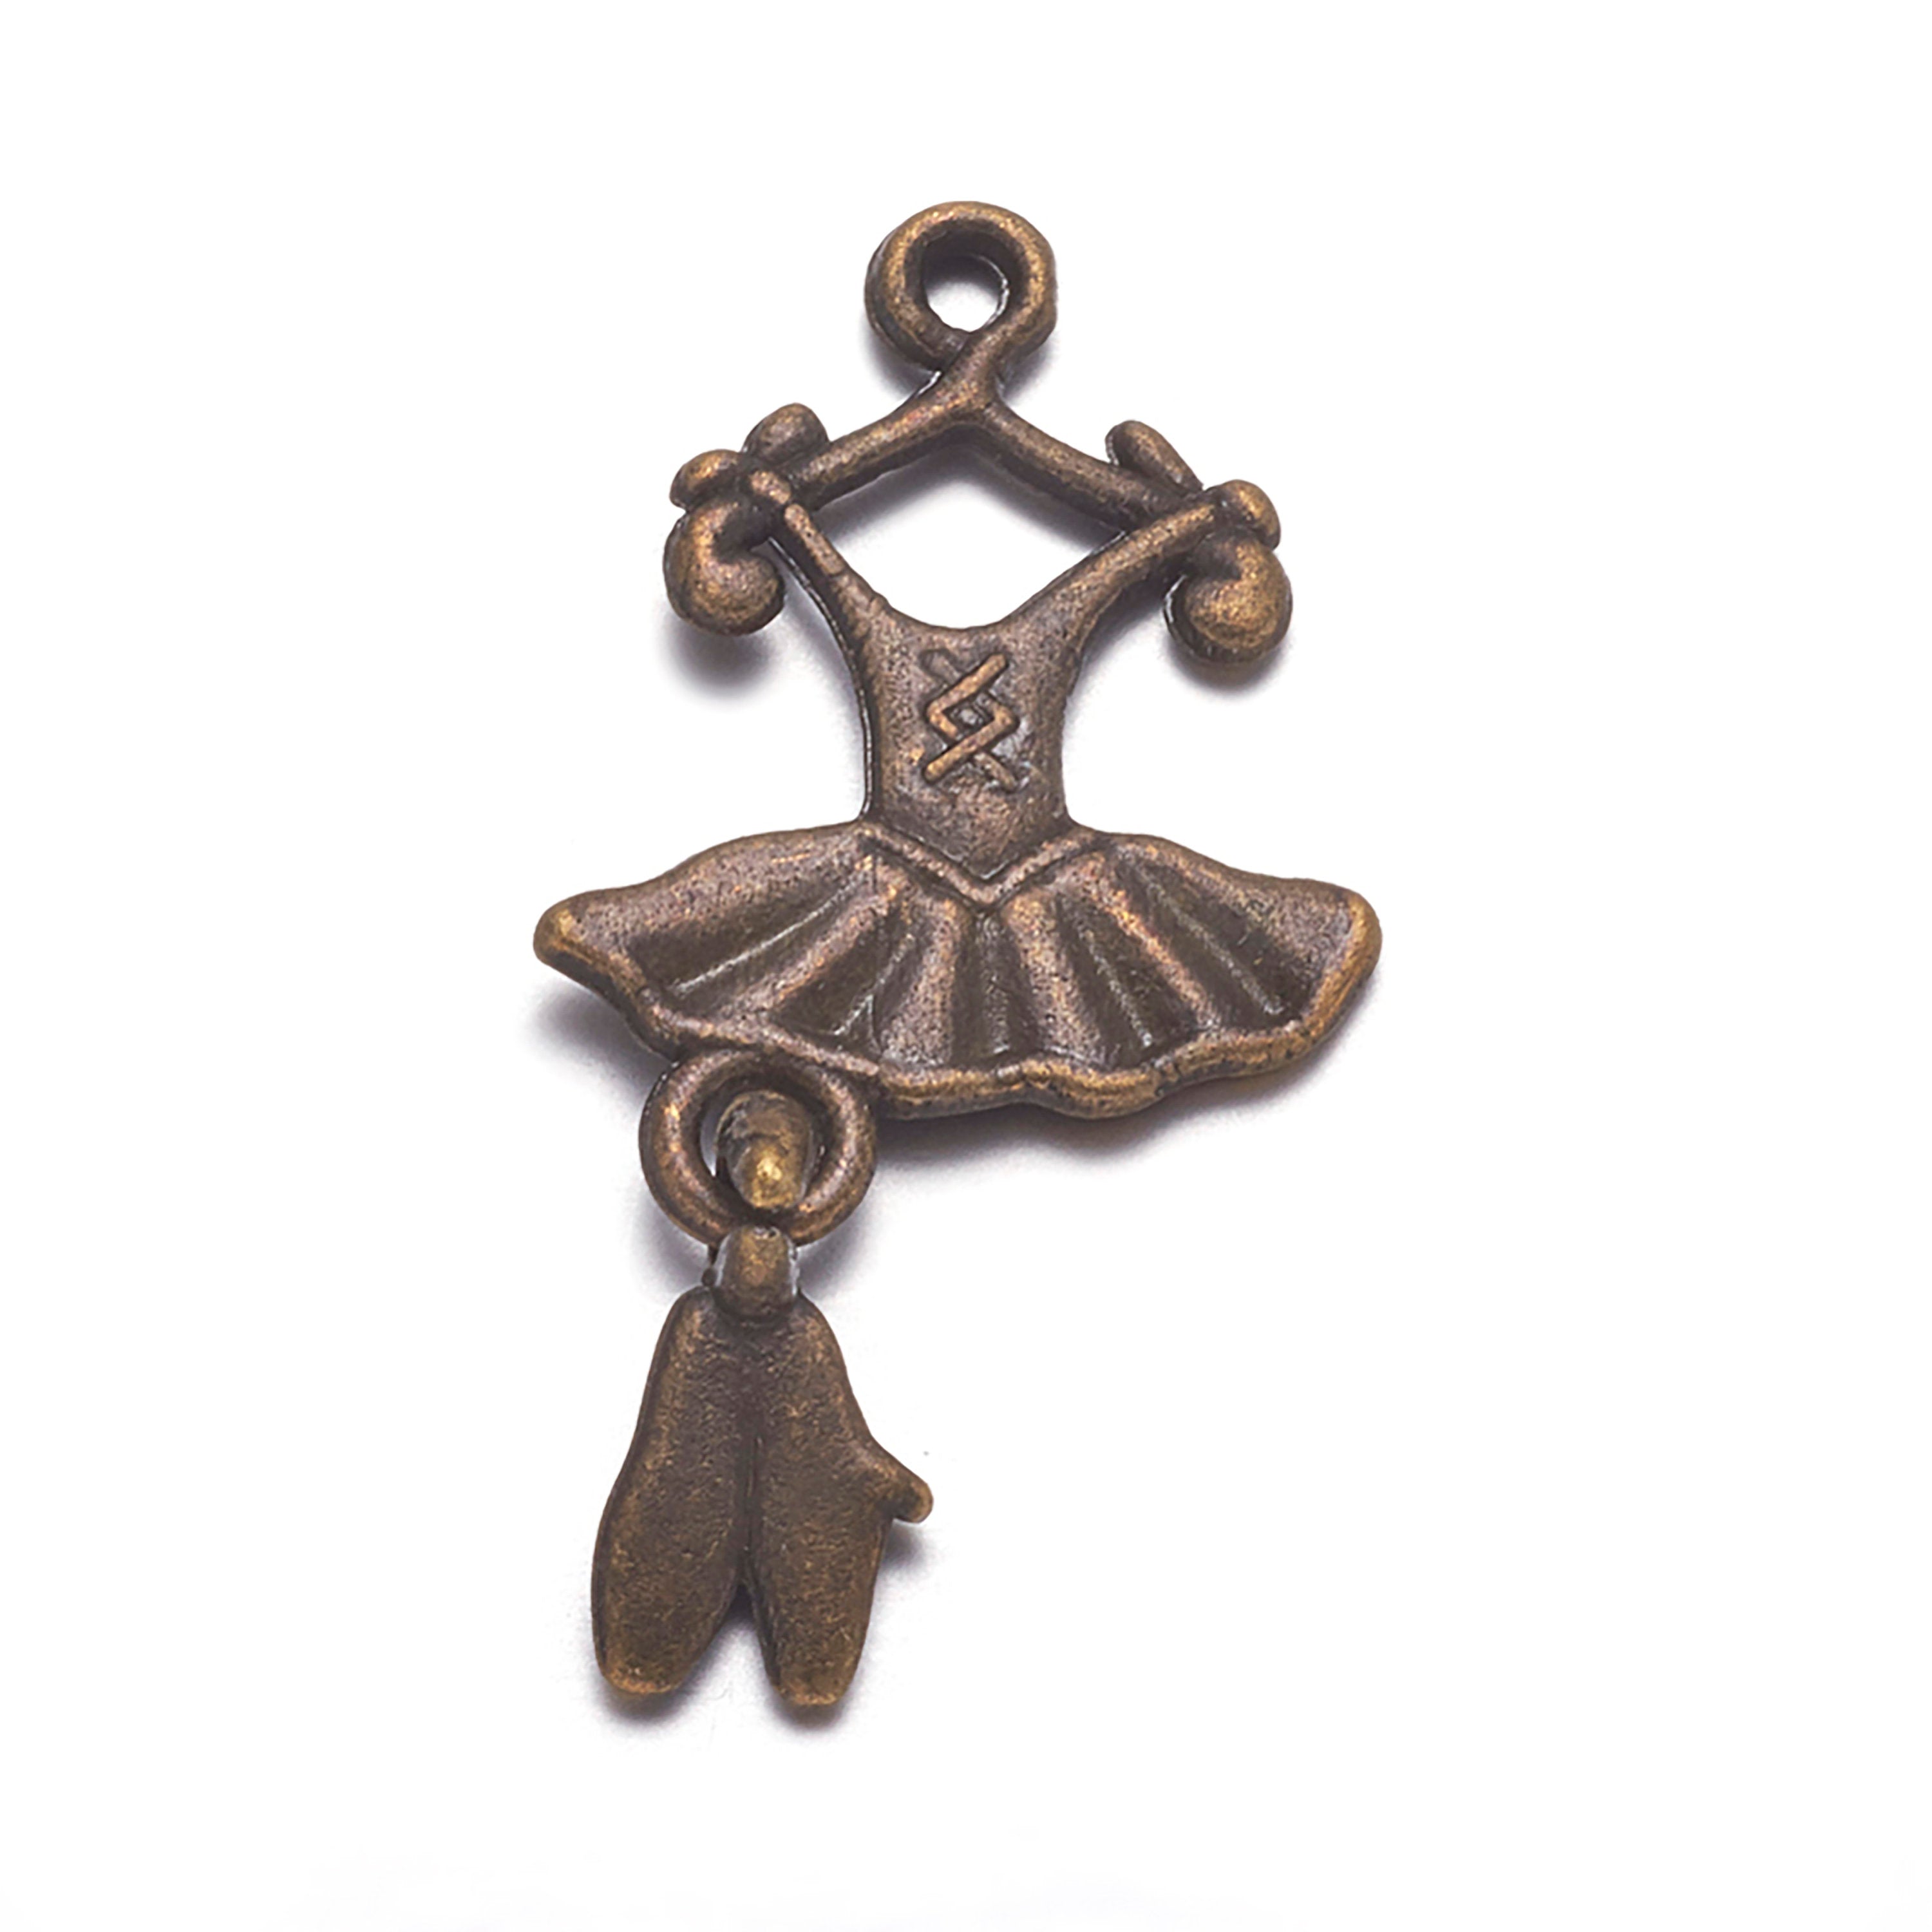 5 pcs, Zinc Based Alloy Charms Round Antique Bronze / Tibetan Style Pendant, Lead Free and Cadmium Free, Ballet Suit